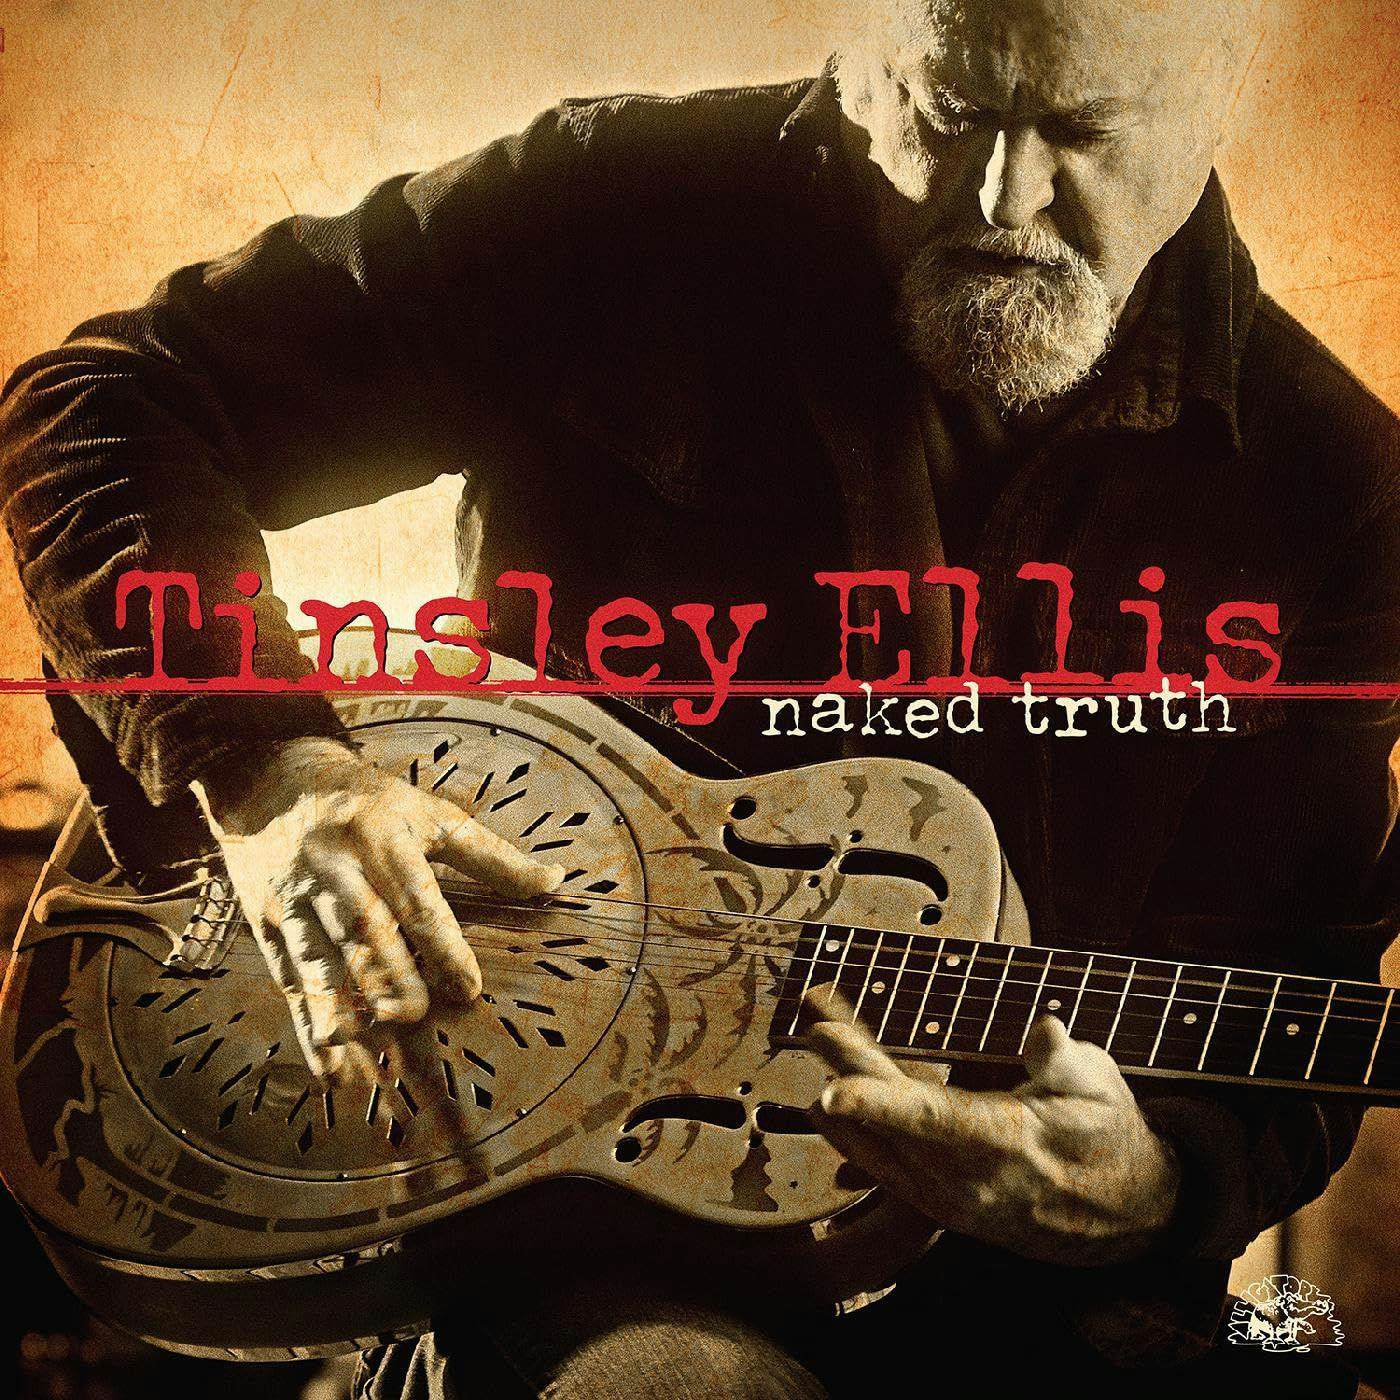 Tinsley Ellis Naked Truth (Metallic Gold Vinyl Record)